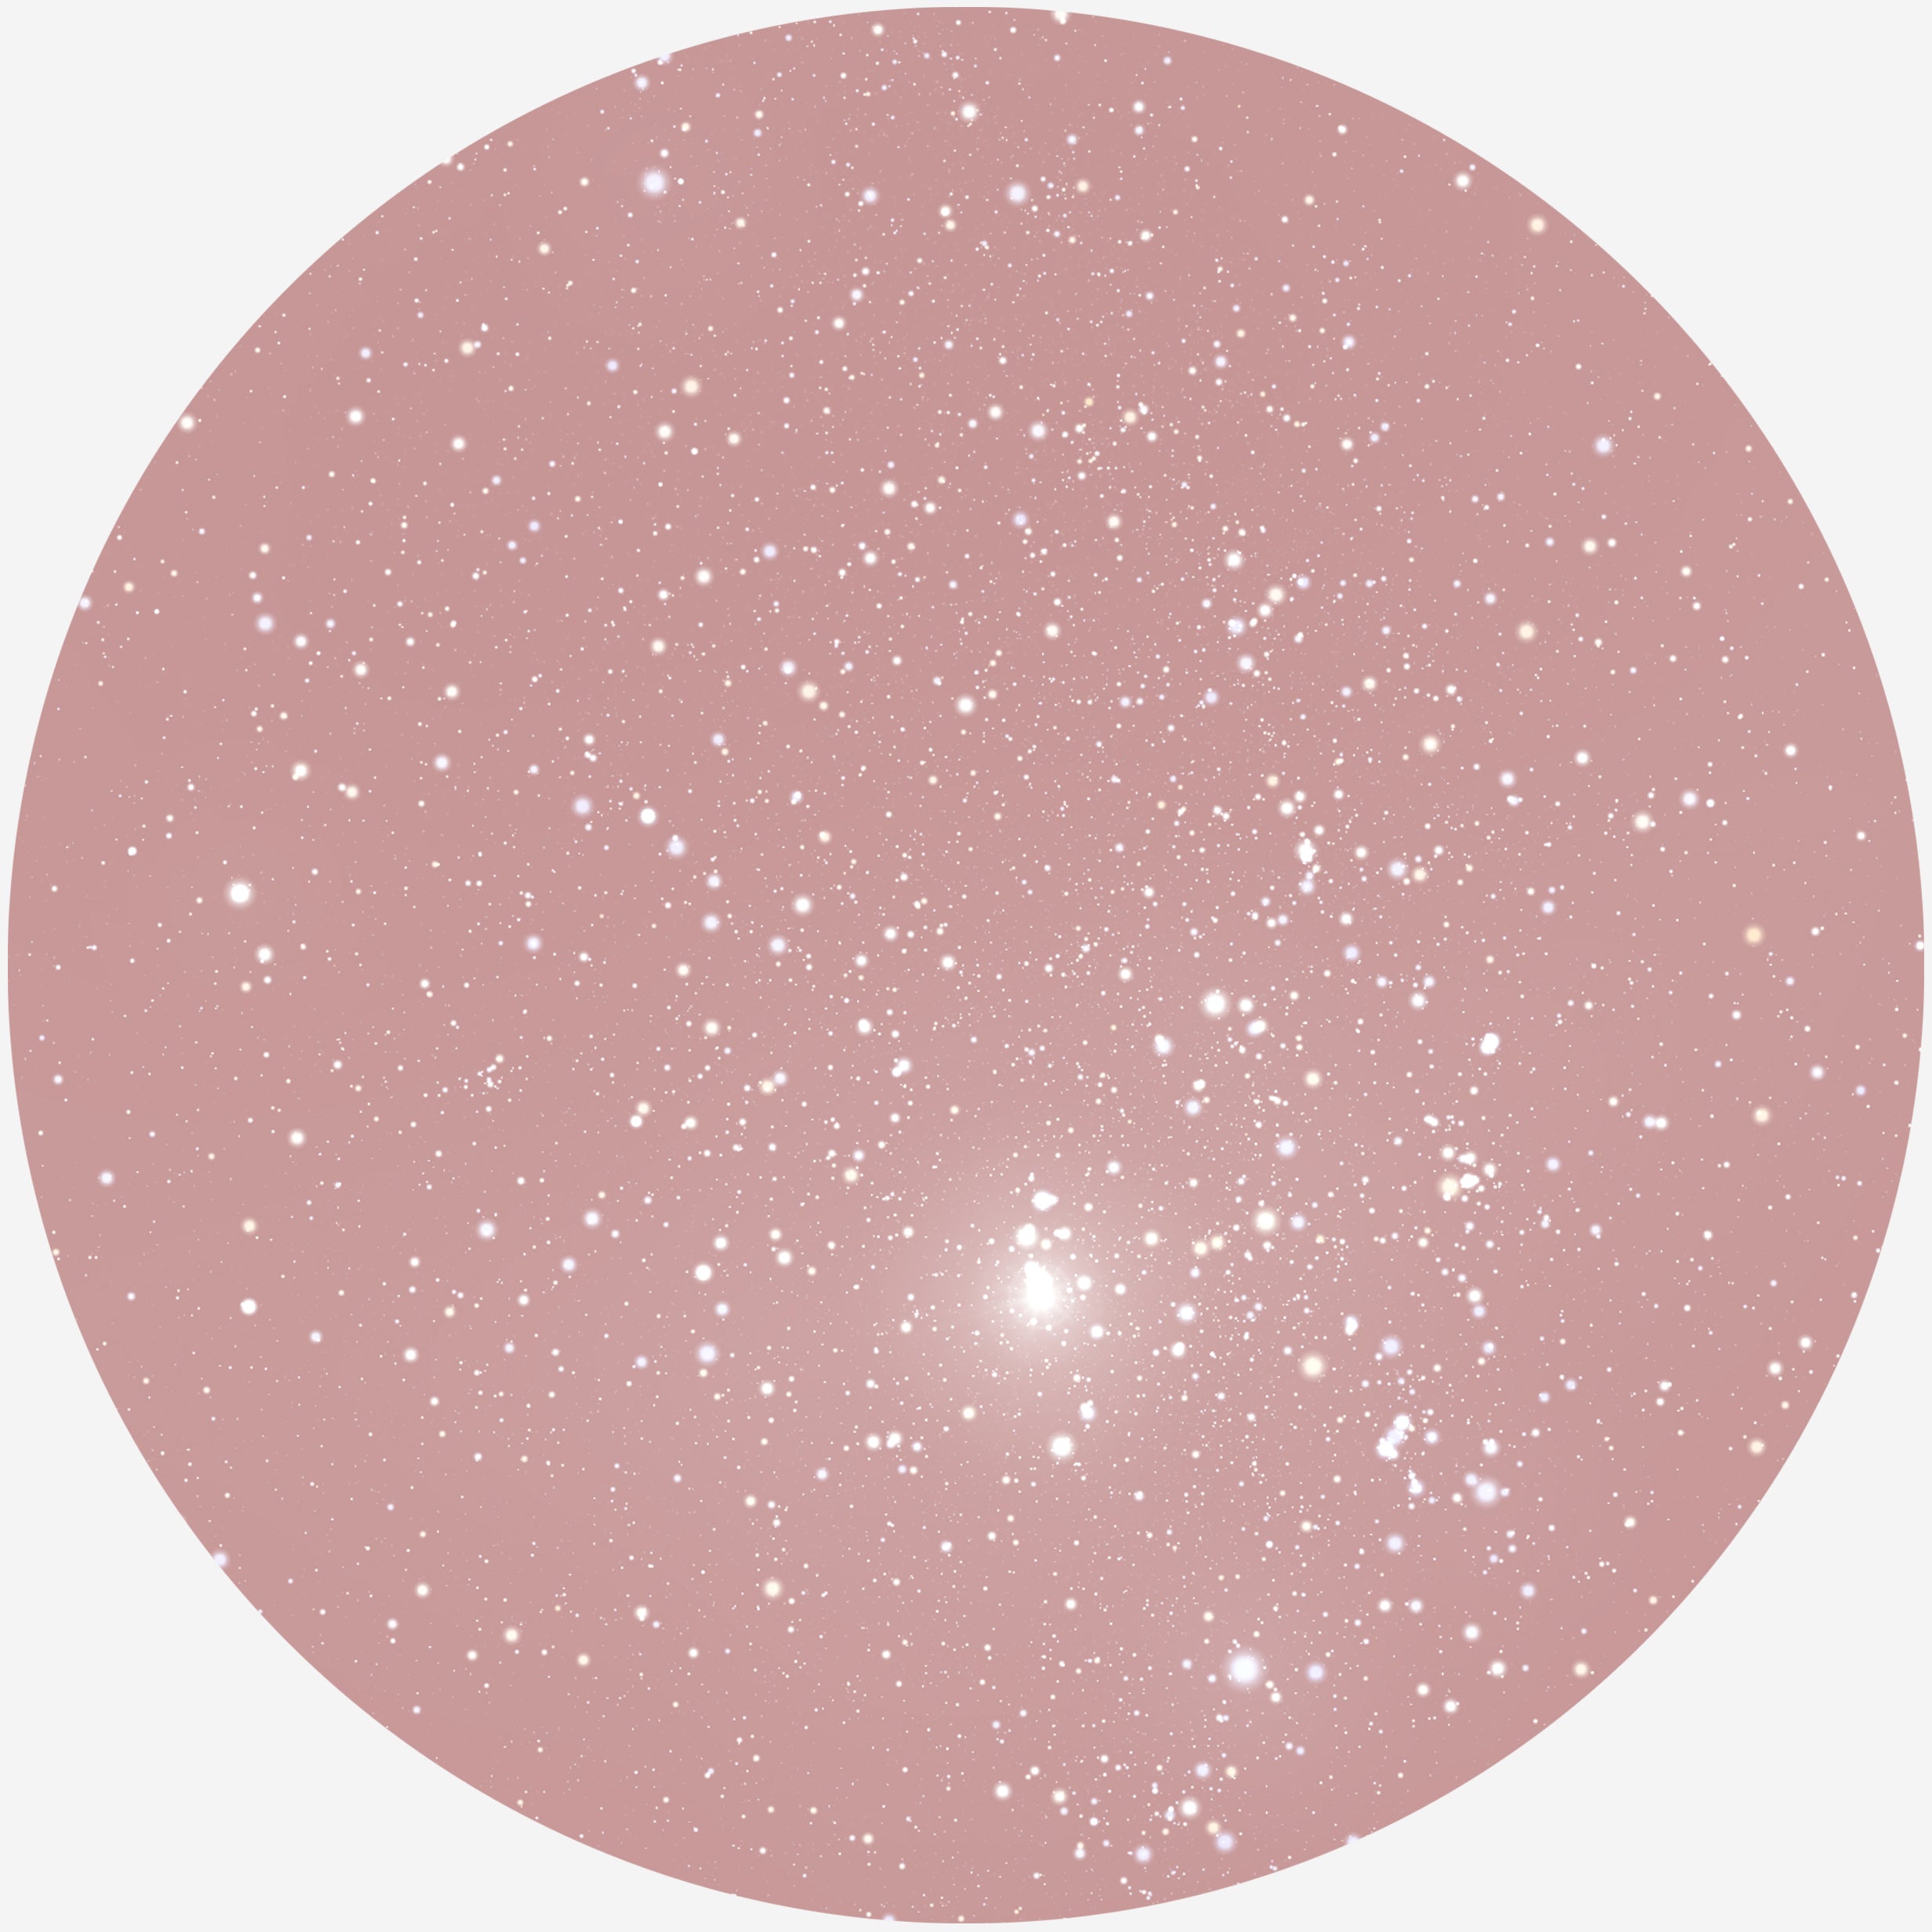 Se RUND PLAKAT MED PERSONLIG STJERNEHIMMEL (BLUSH)) - 30 cm / Stjernehimmel med stjernebilleder hos KISPUS